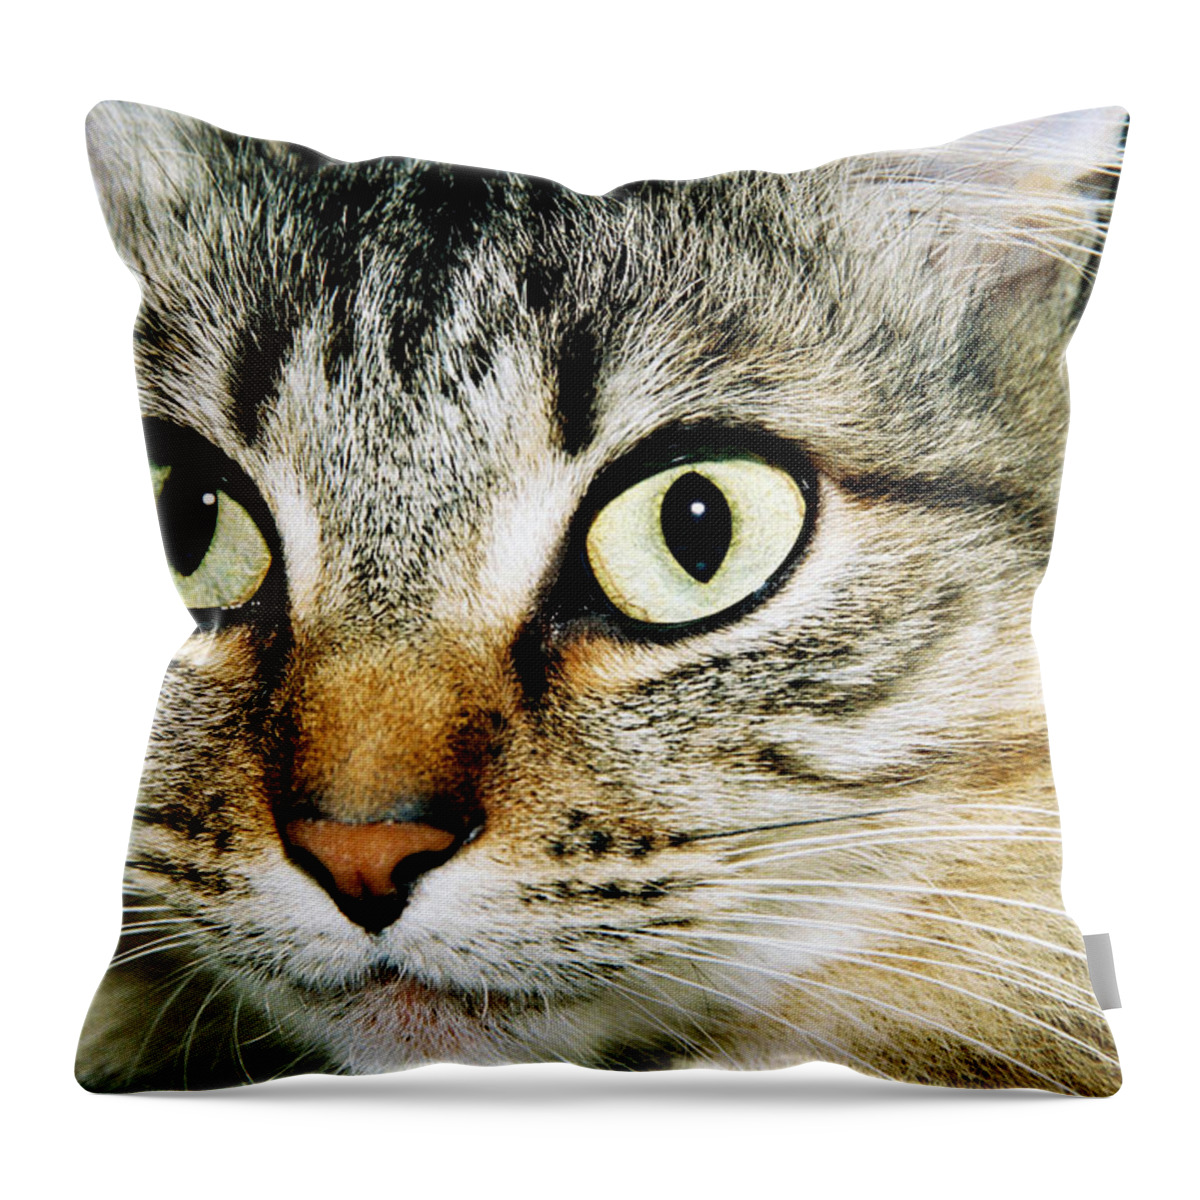 Cat Throw Pillow featuring the photograph Senorita Verdita. by Spirit Vision Photography